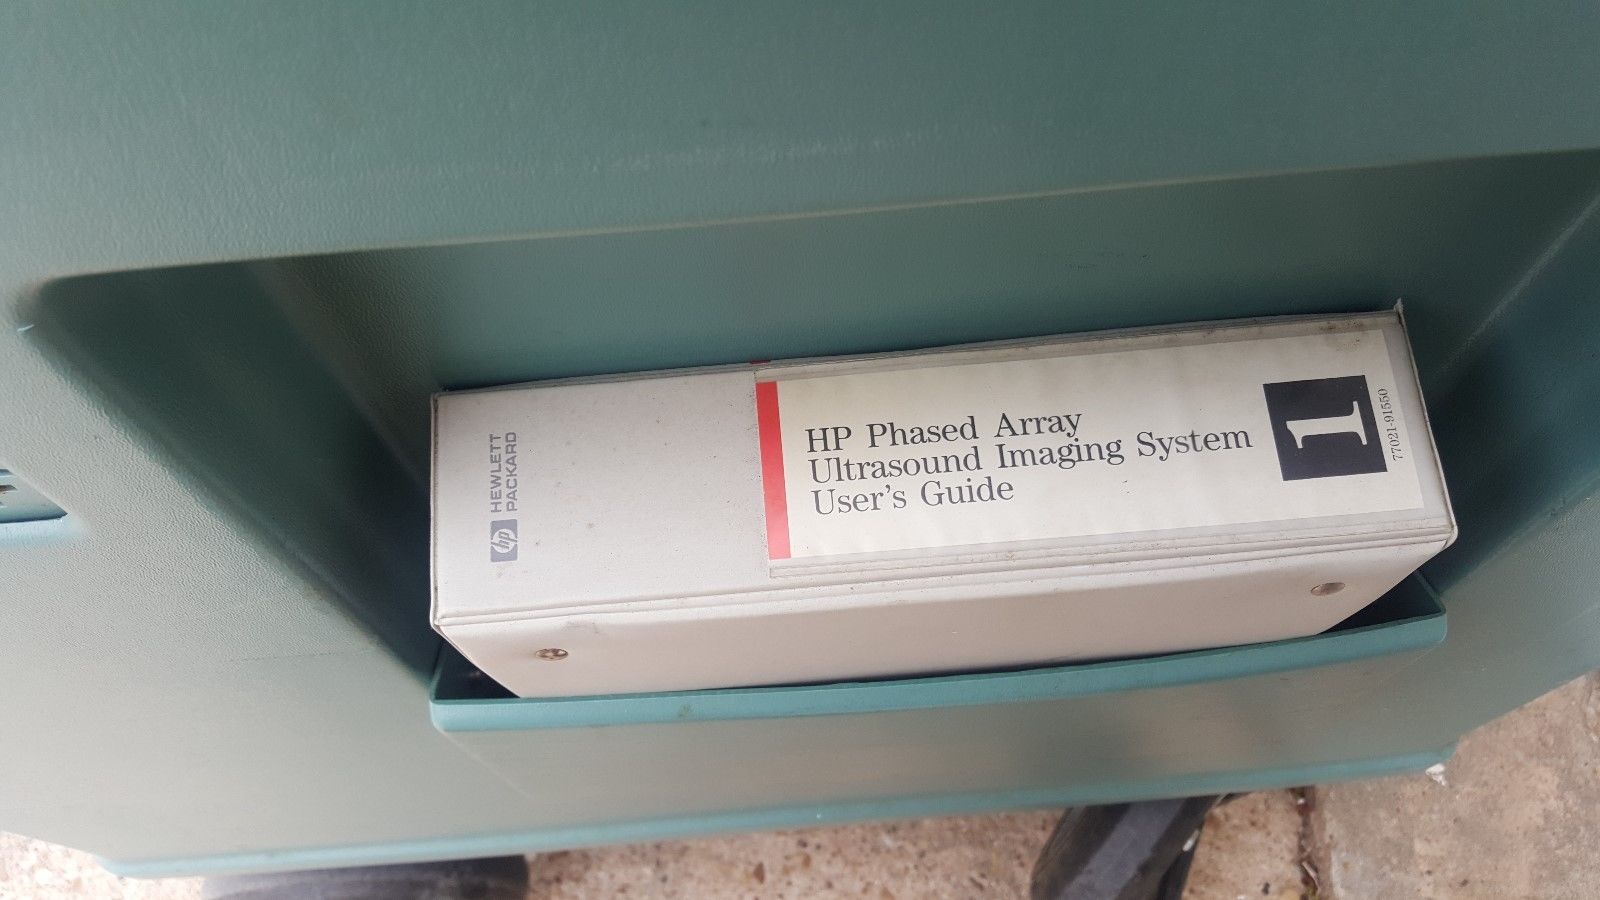 HP/Agilent Sonos 1500 77020A Ultrasound System w/ Panasonic AG-7200 VHS